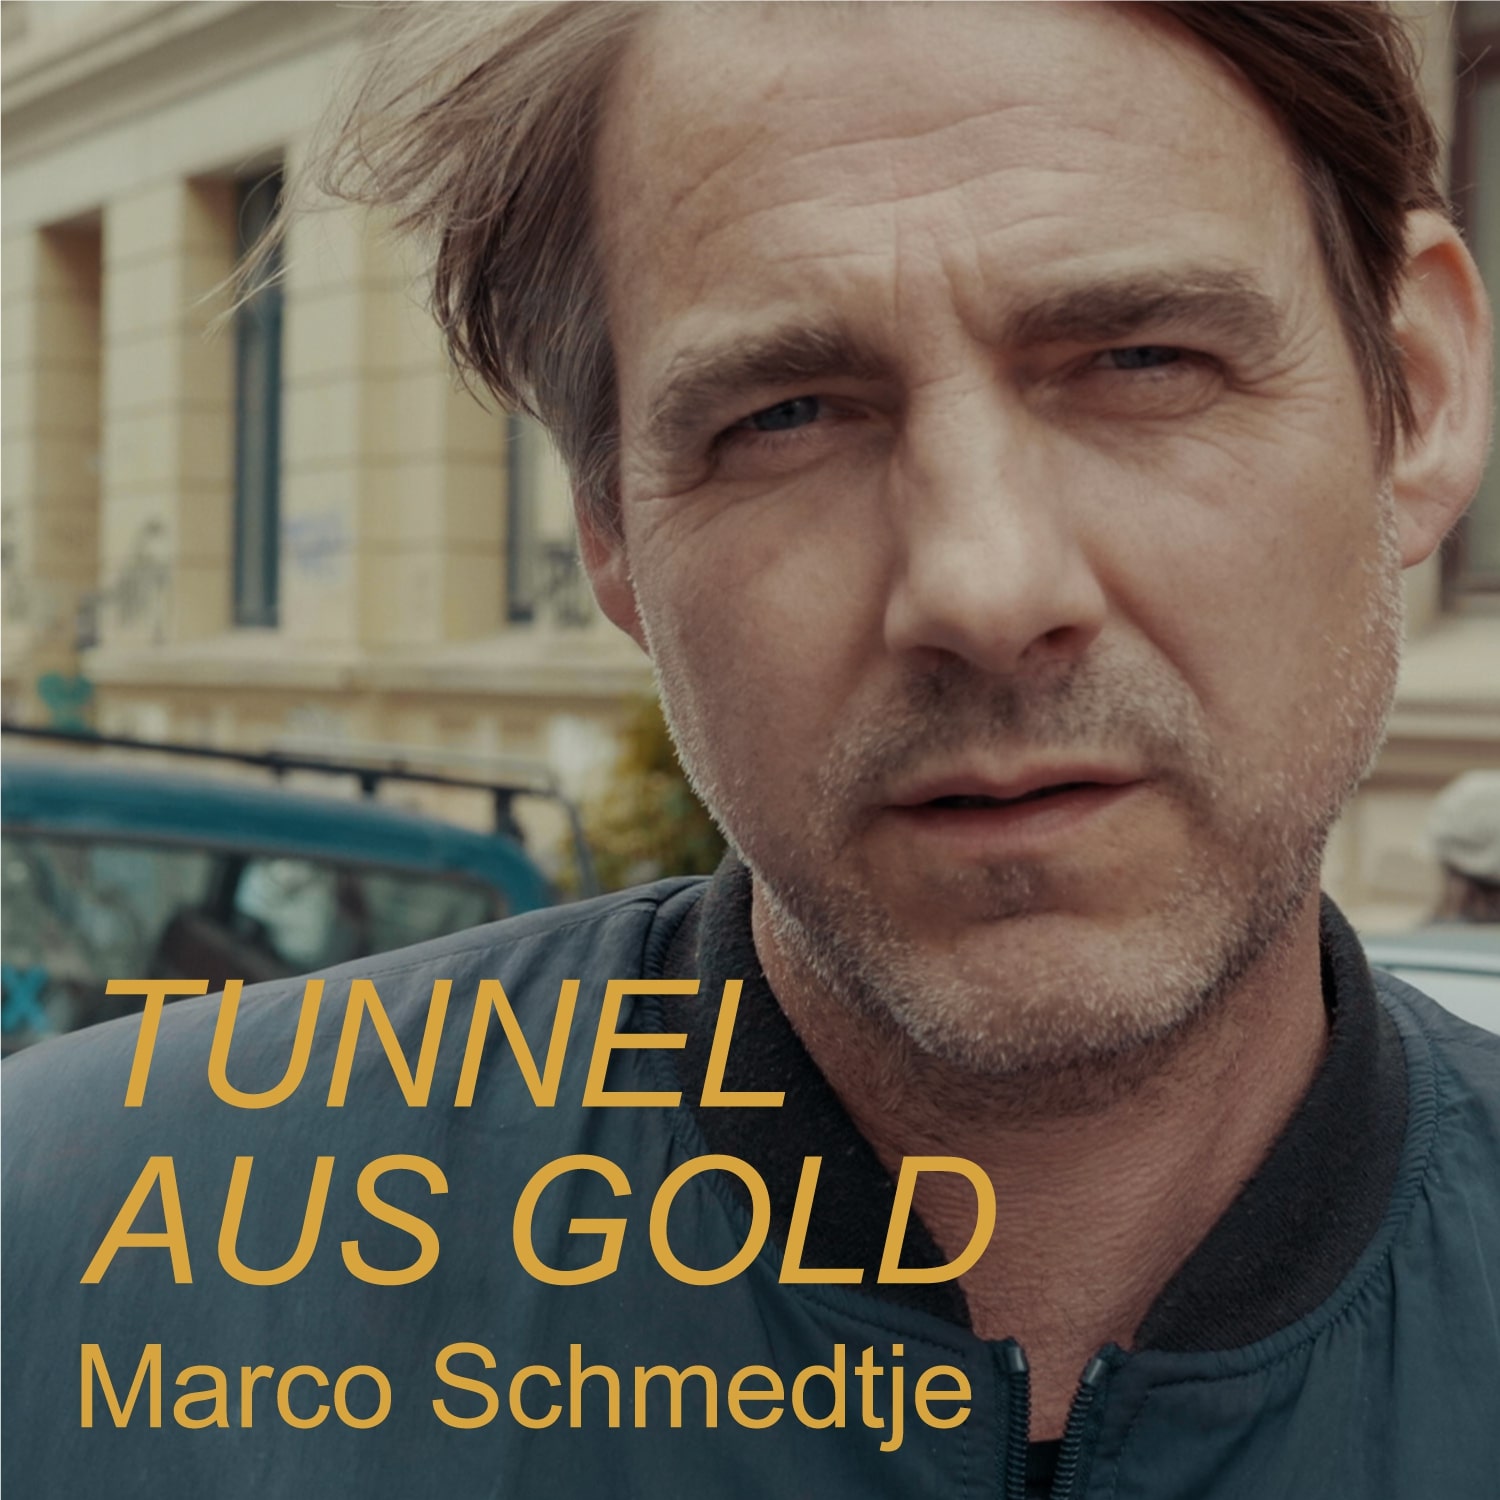 MARCO SCHMEDTDJE – Tunnel aus Gold